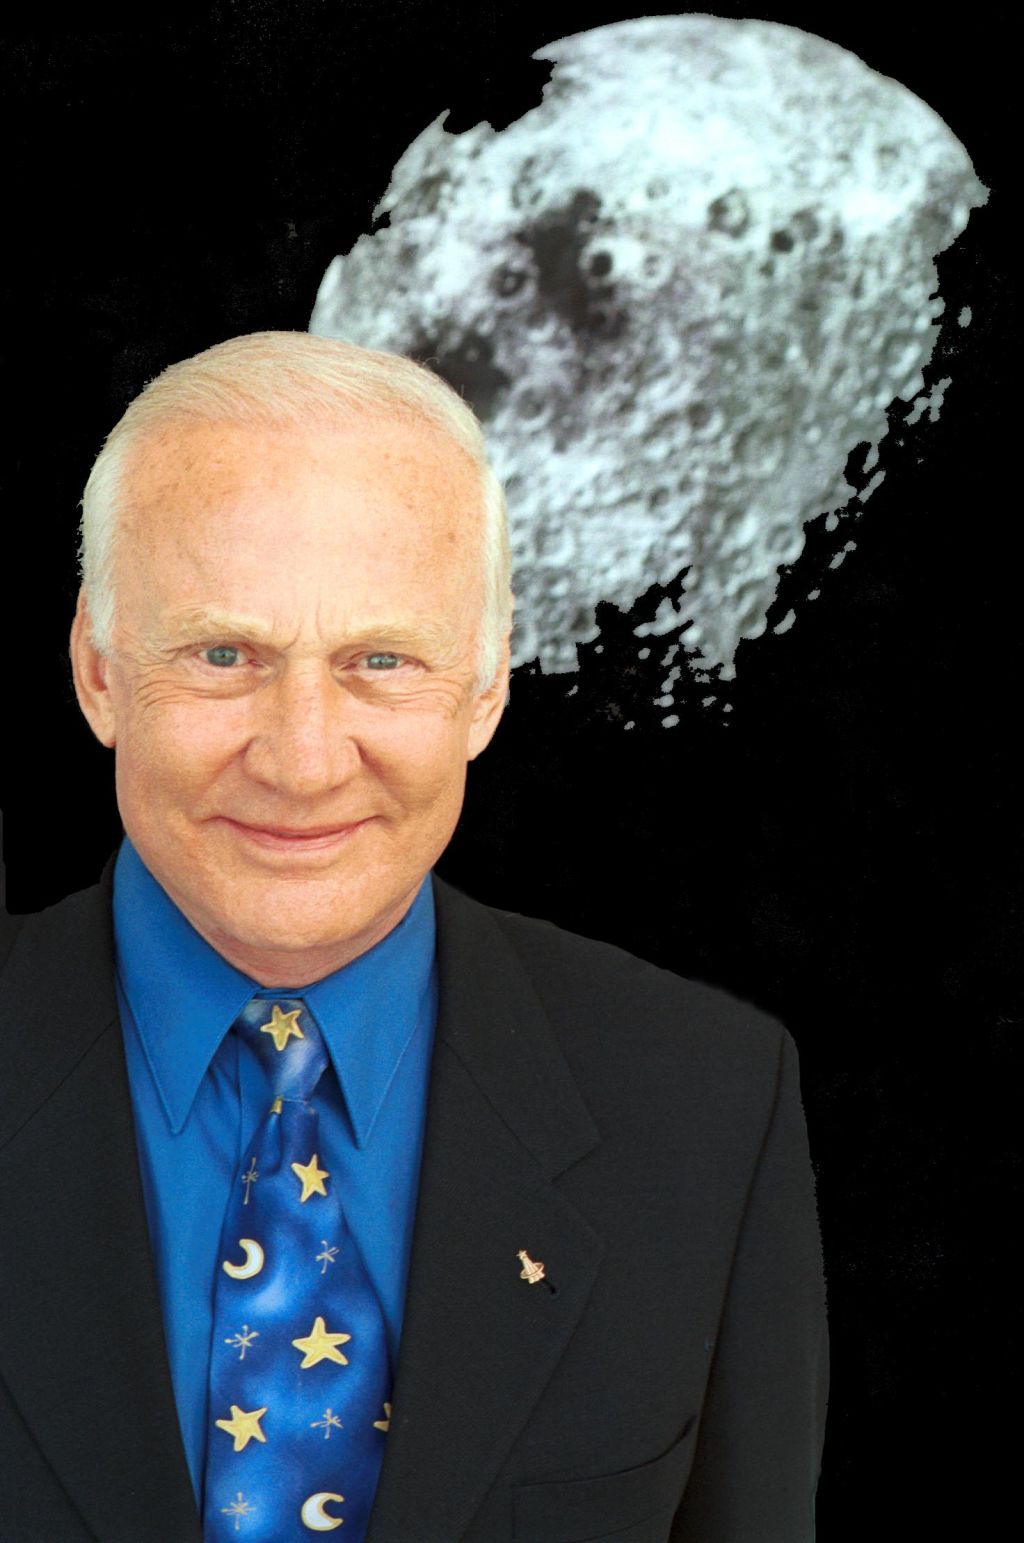 Buzz Aldrin through the years